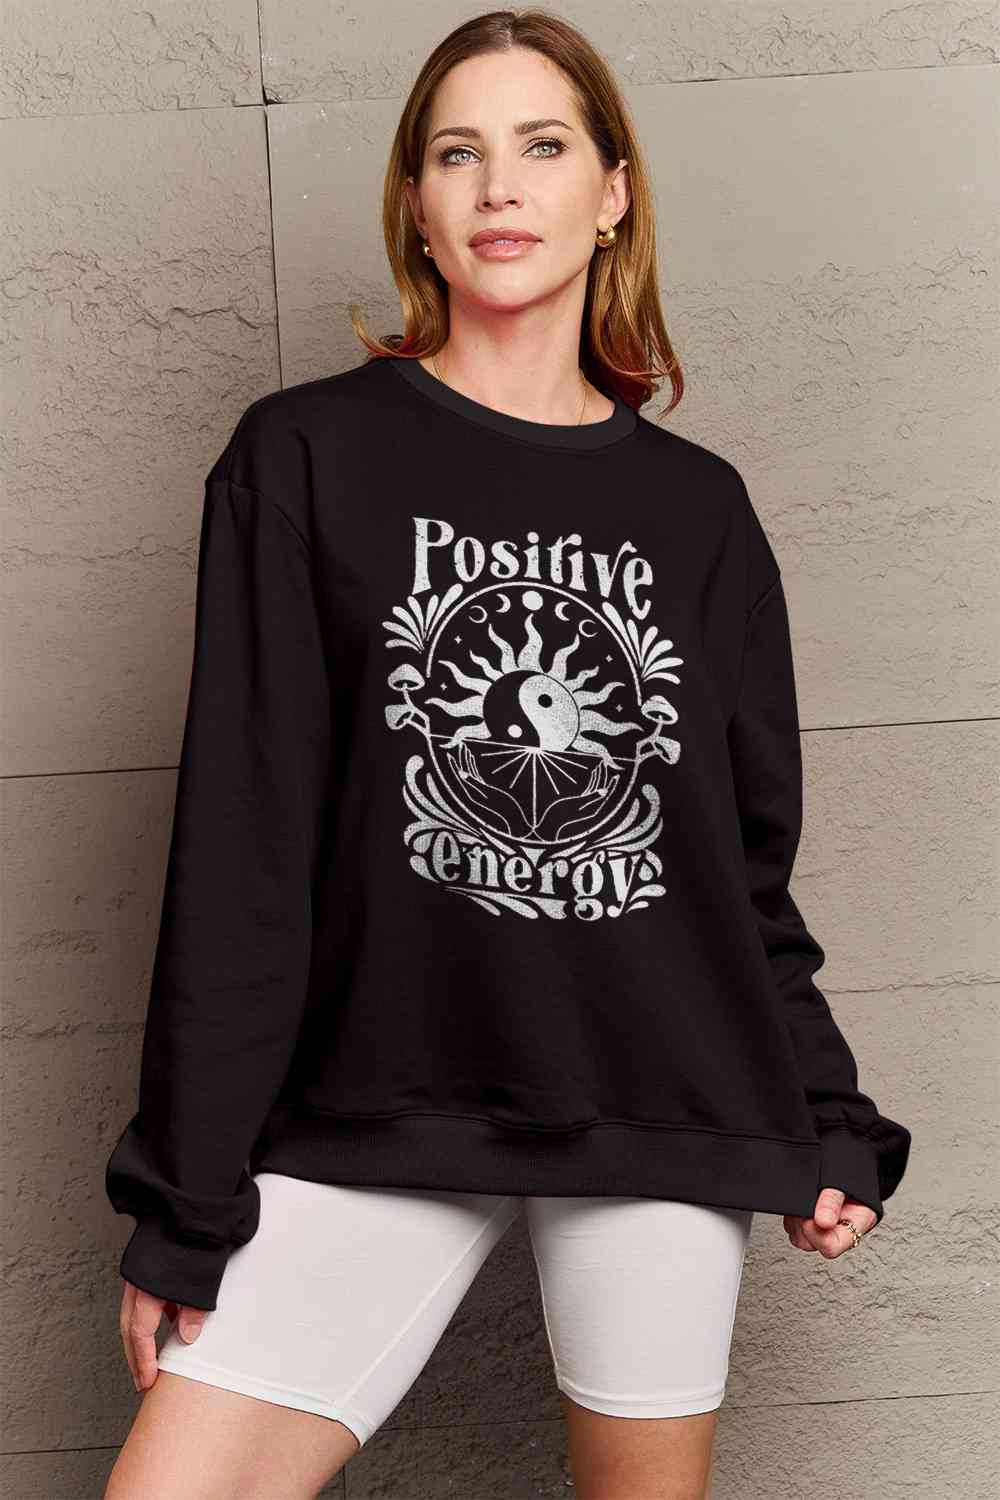 Simply Love Full Size POSITIVE ENERGY Graphic Sweatshirt